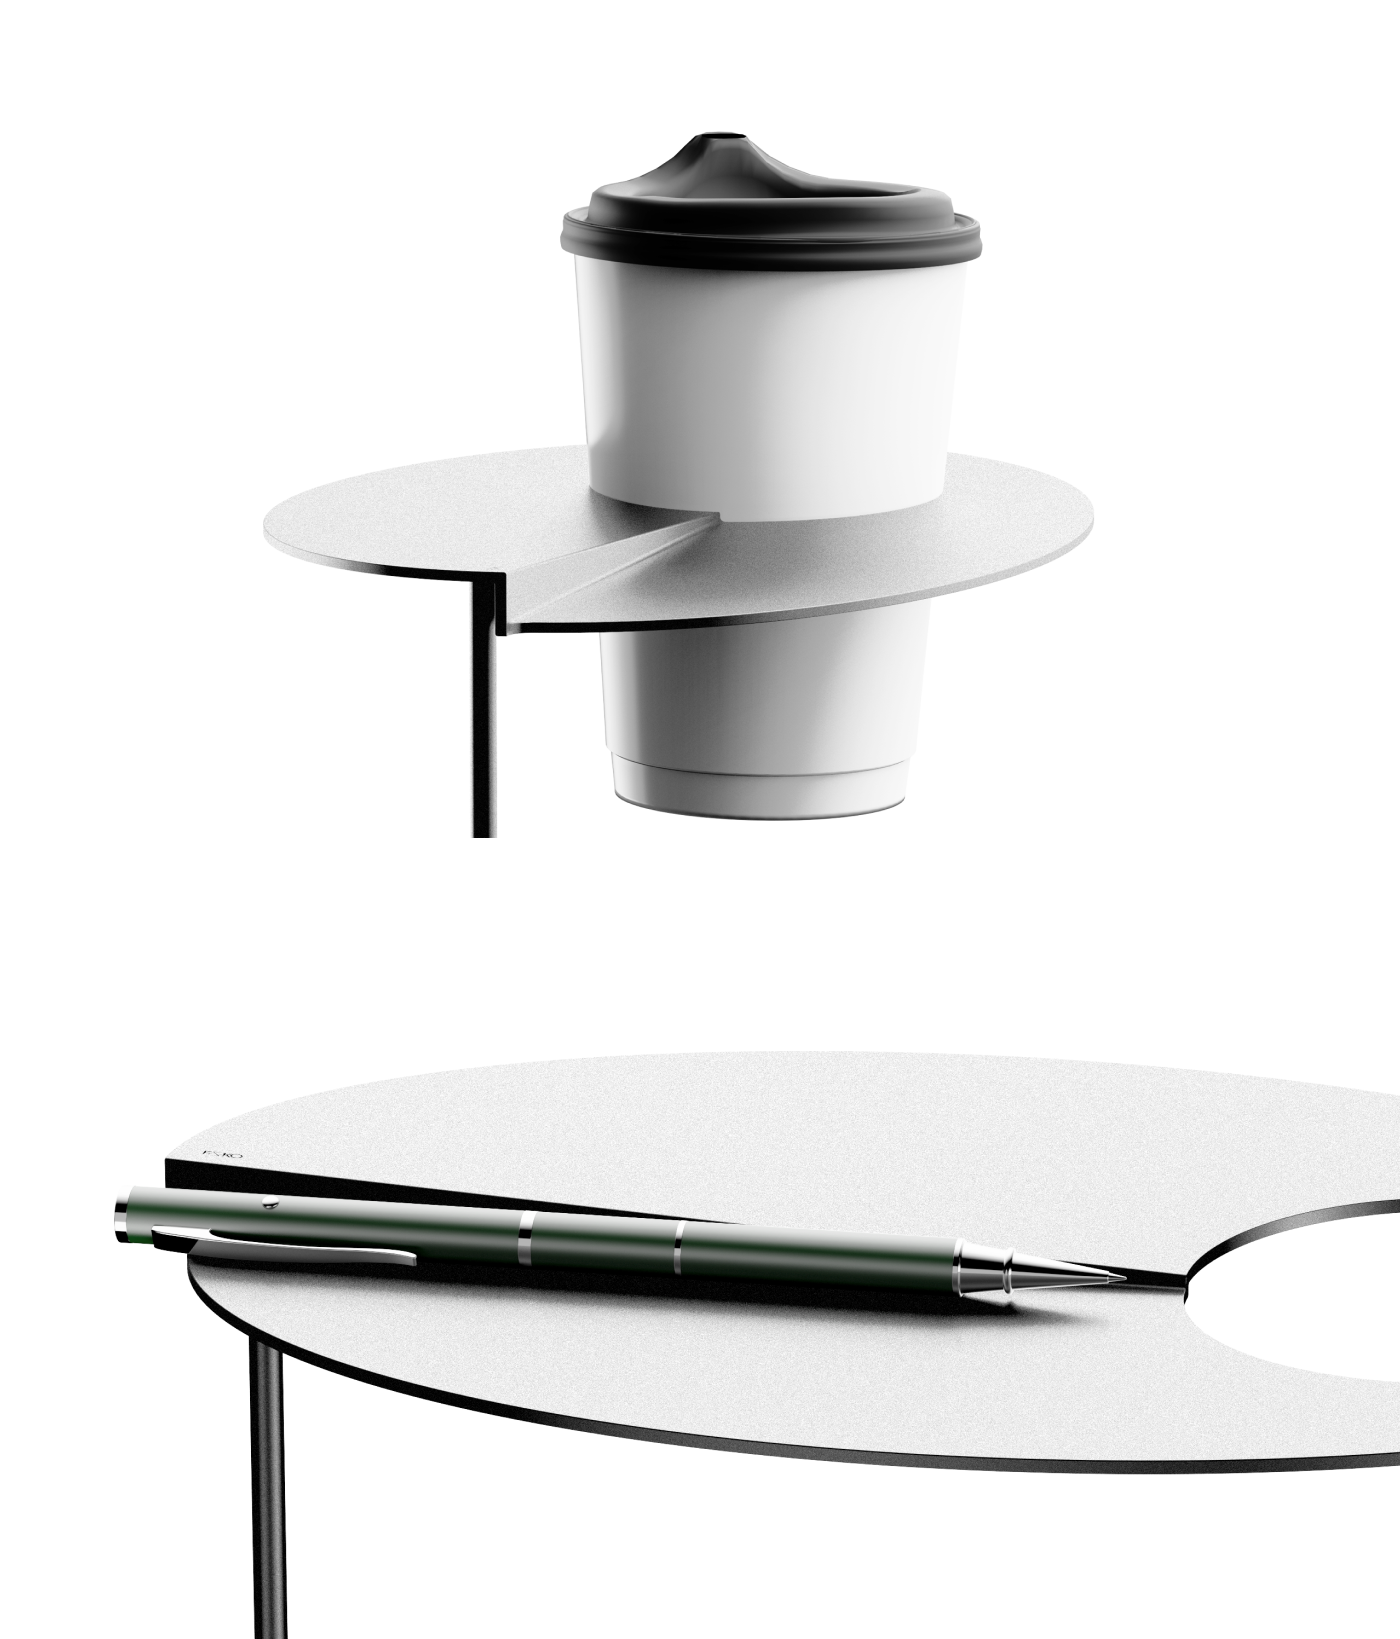 desk product visual design industrial design  concept graphic design  deskterior headset pen